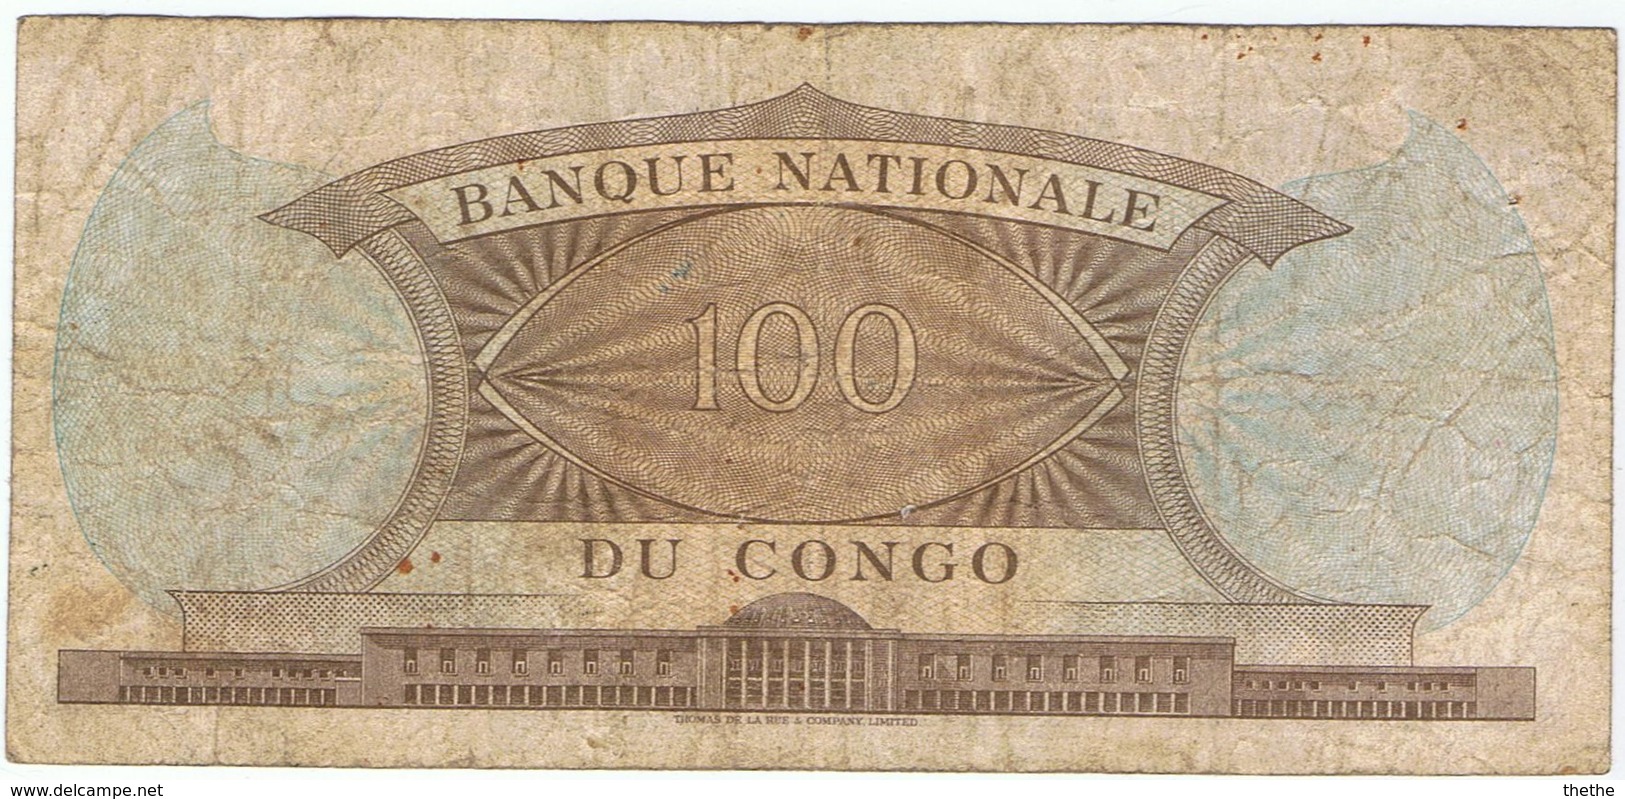 CONGO - 100 FRANCS - 1961 - Republic Of Congo (Congo-Brazzaville)